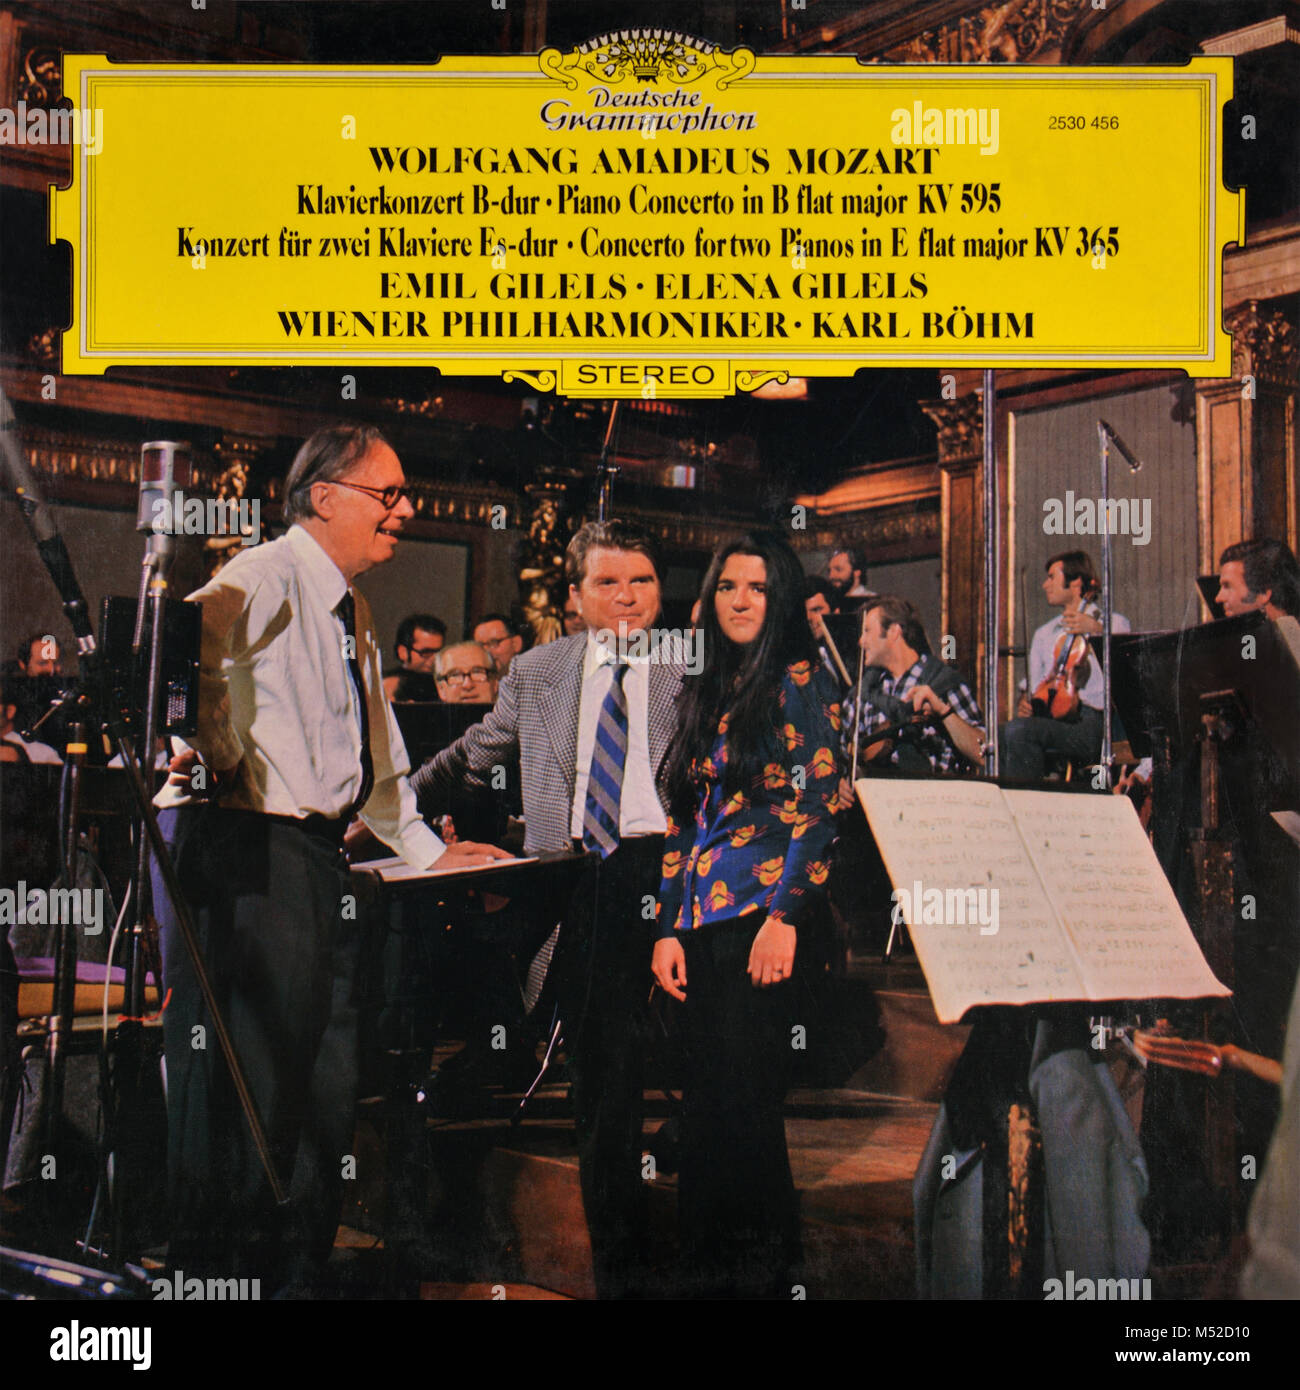 Wolfgang Amadeus Mozart - Emil Gilels, Elena Gilels, Wiener Philharmoniker,Karl Böhm - original vinyl album cover - 1974 Stock Photo